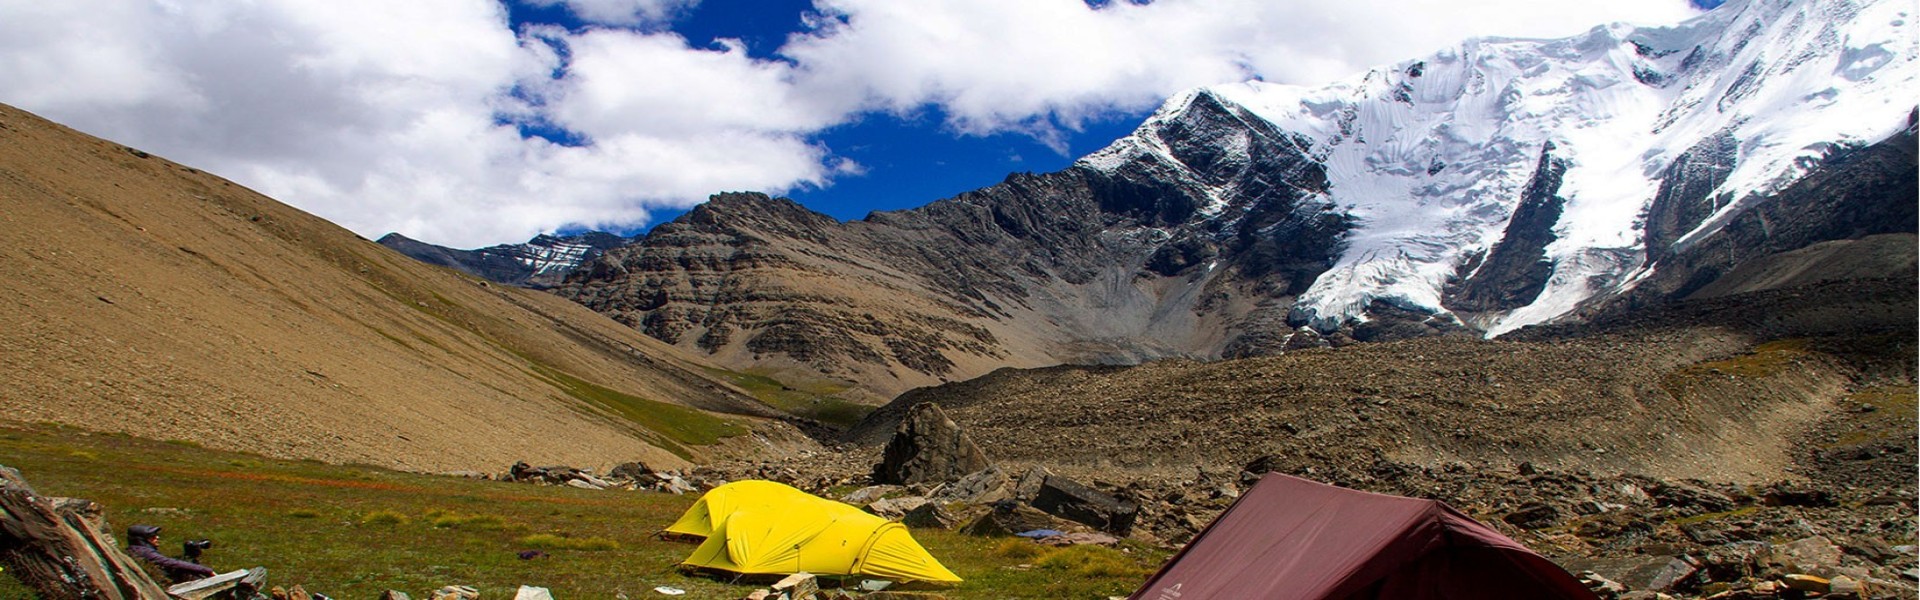 Upper Dolpo Trekking In Nepal